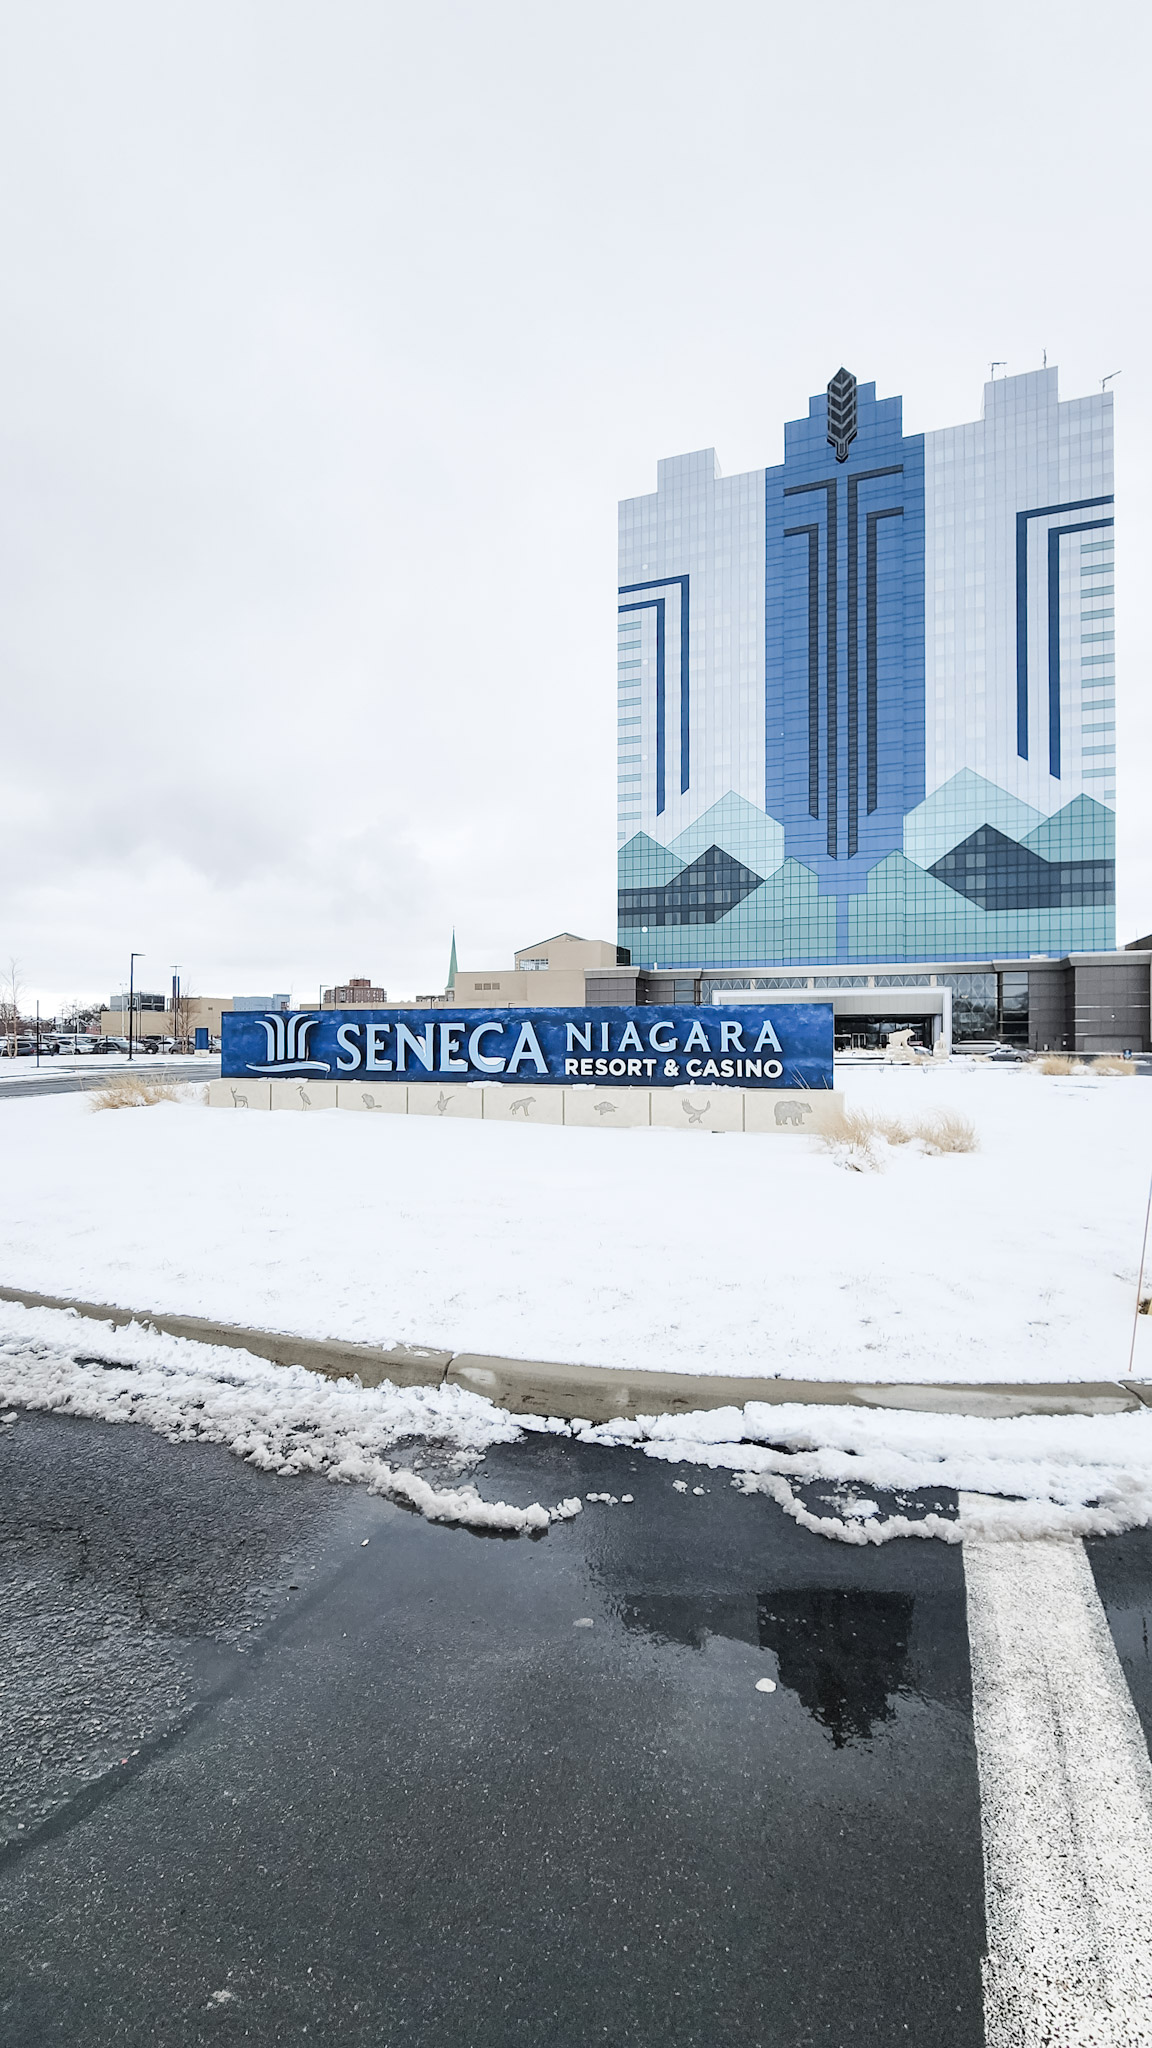 The front sign of Seneca Niagara Resort & Casino.